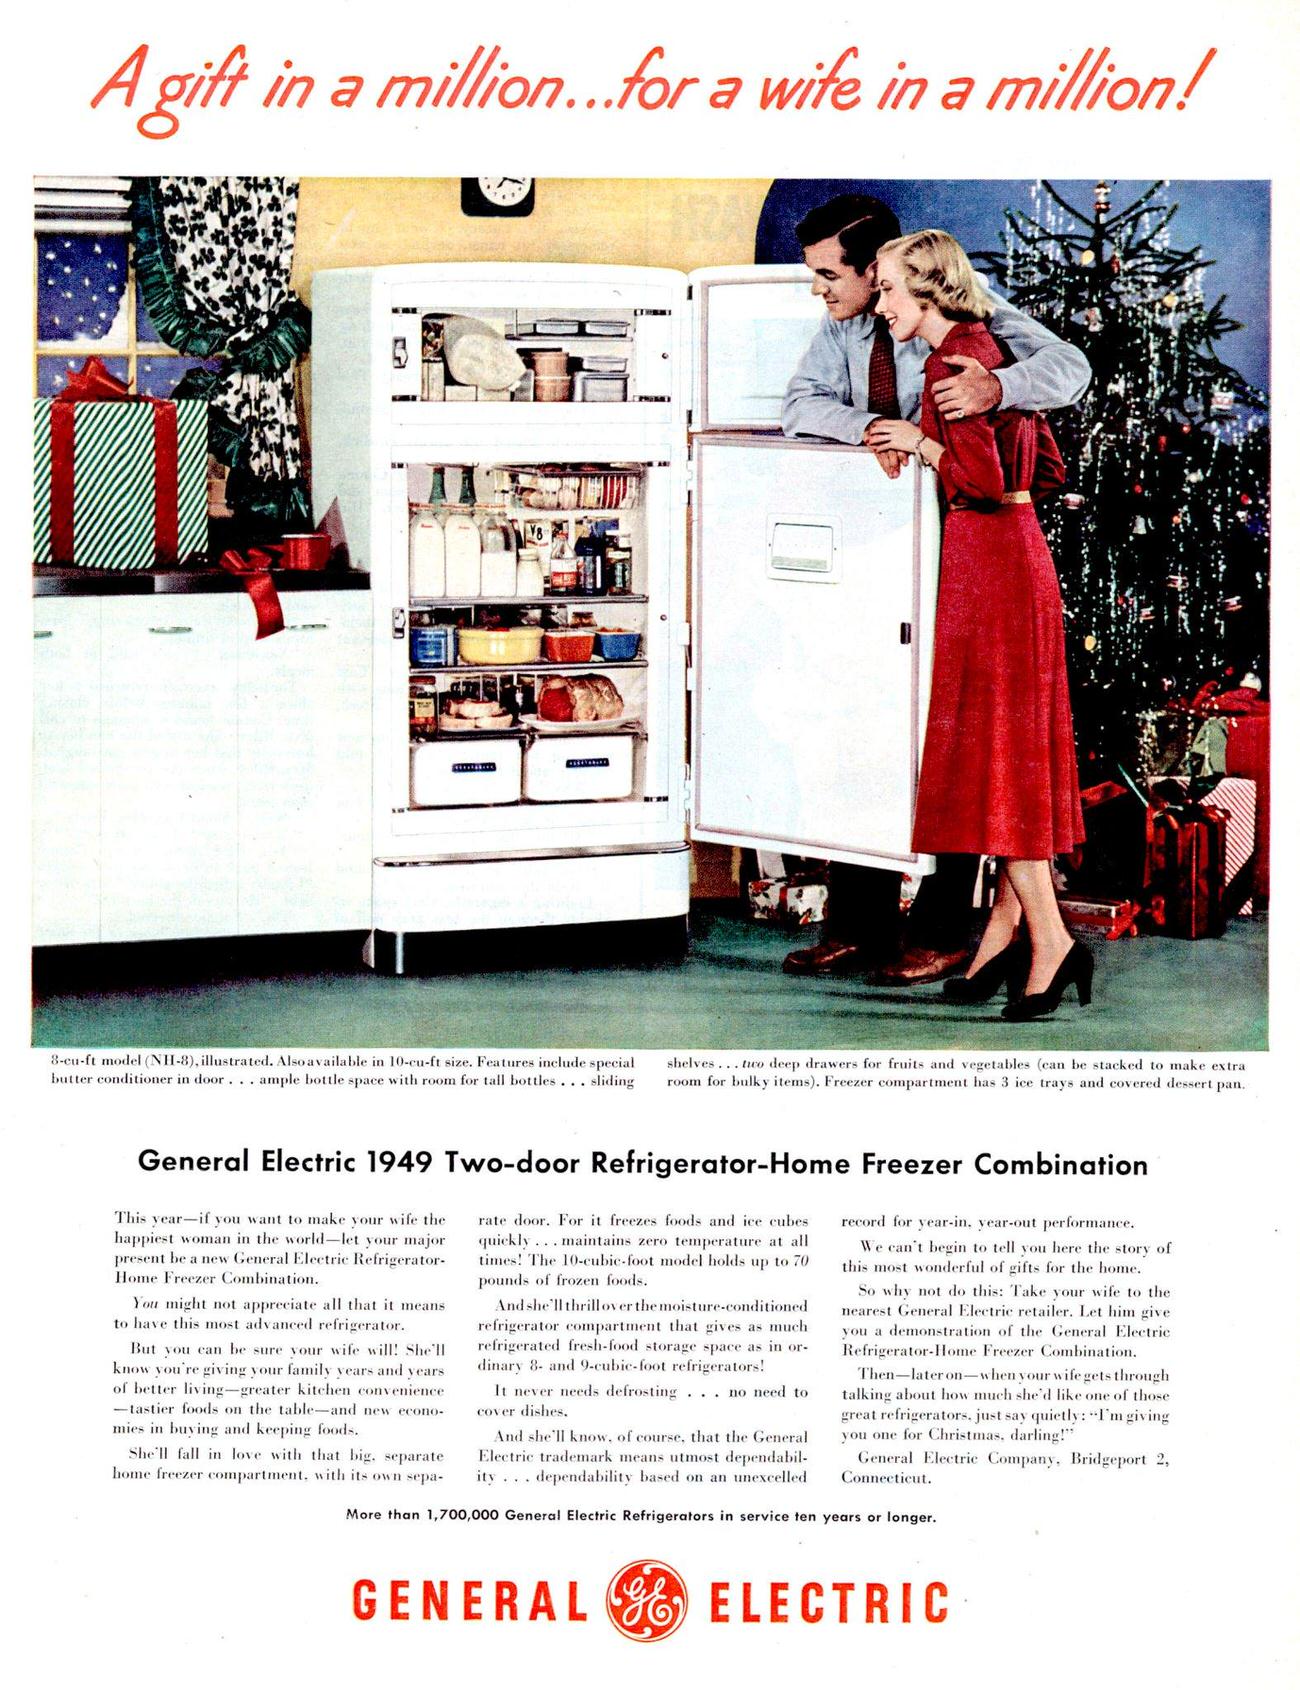 General Electric fridge and freezer ad, 1949.